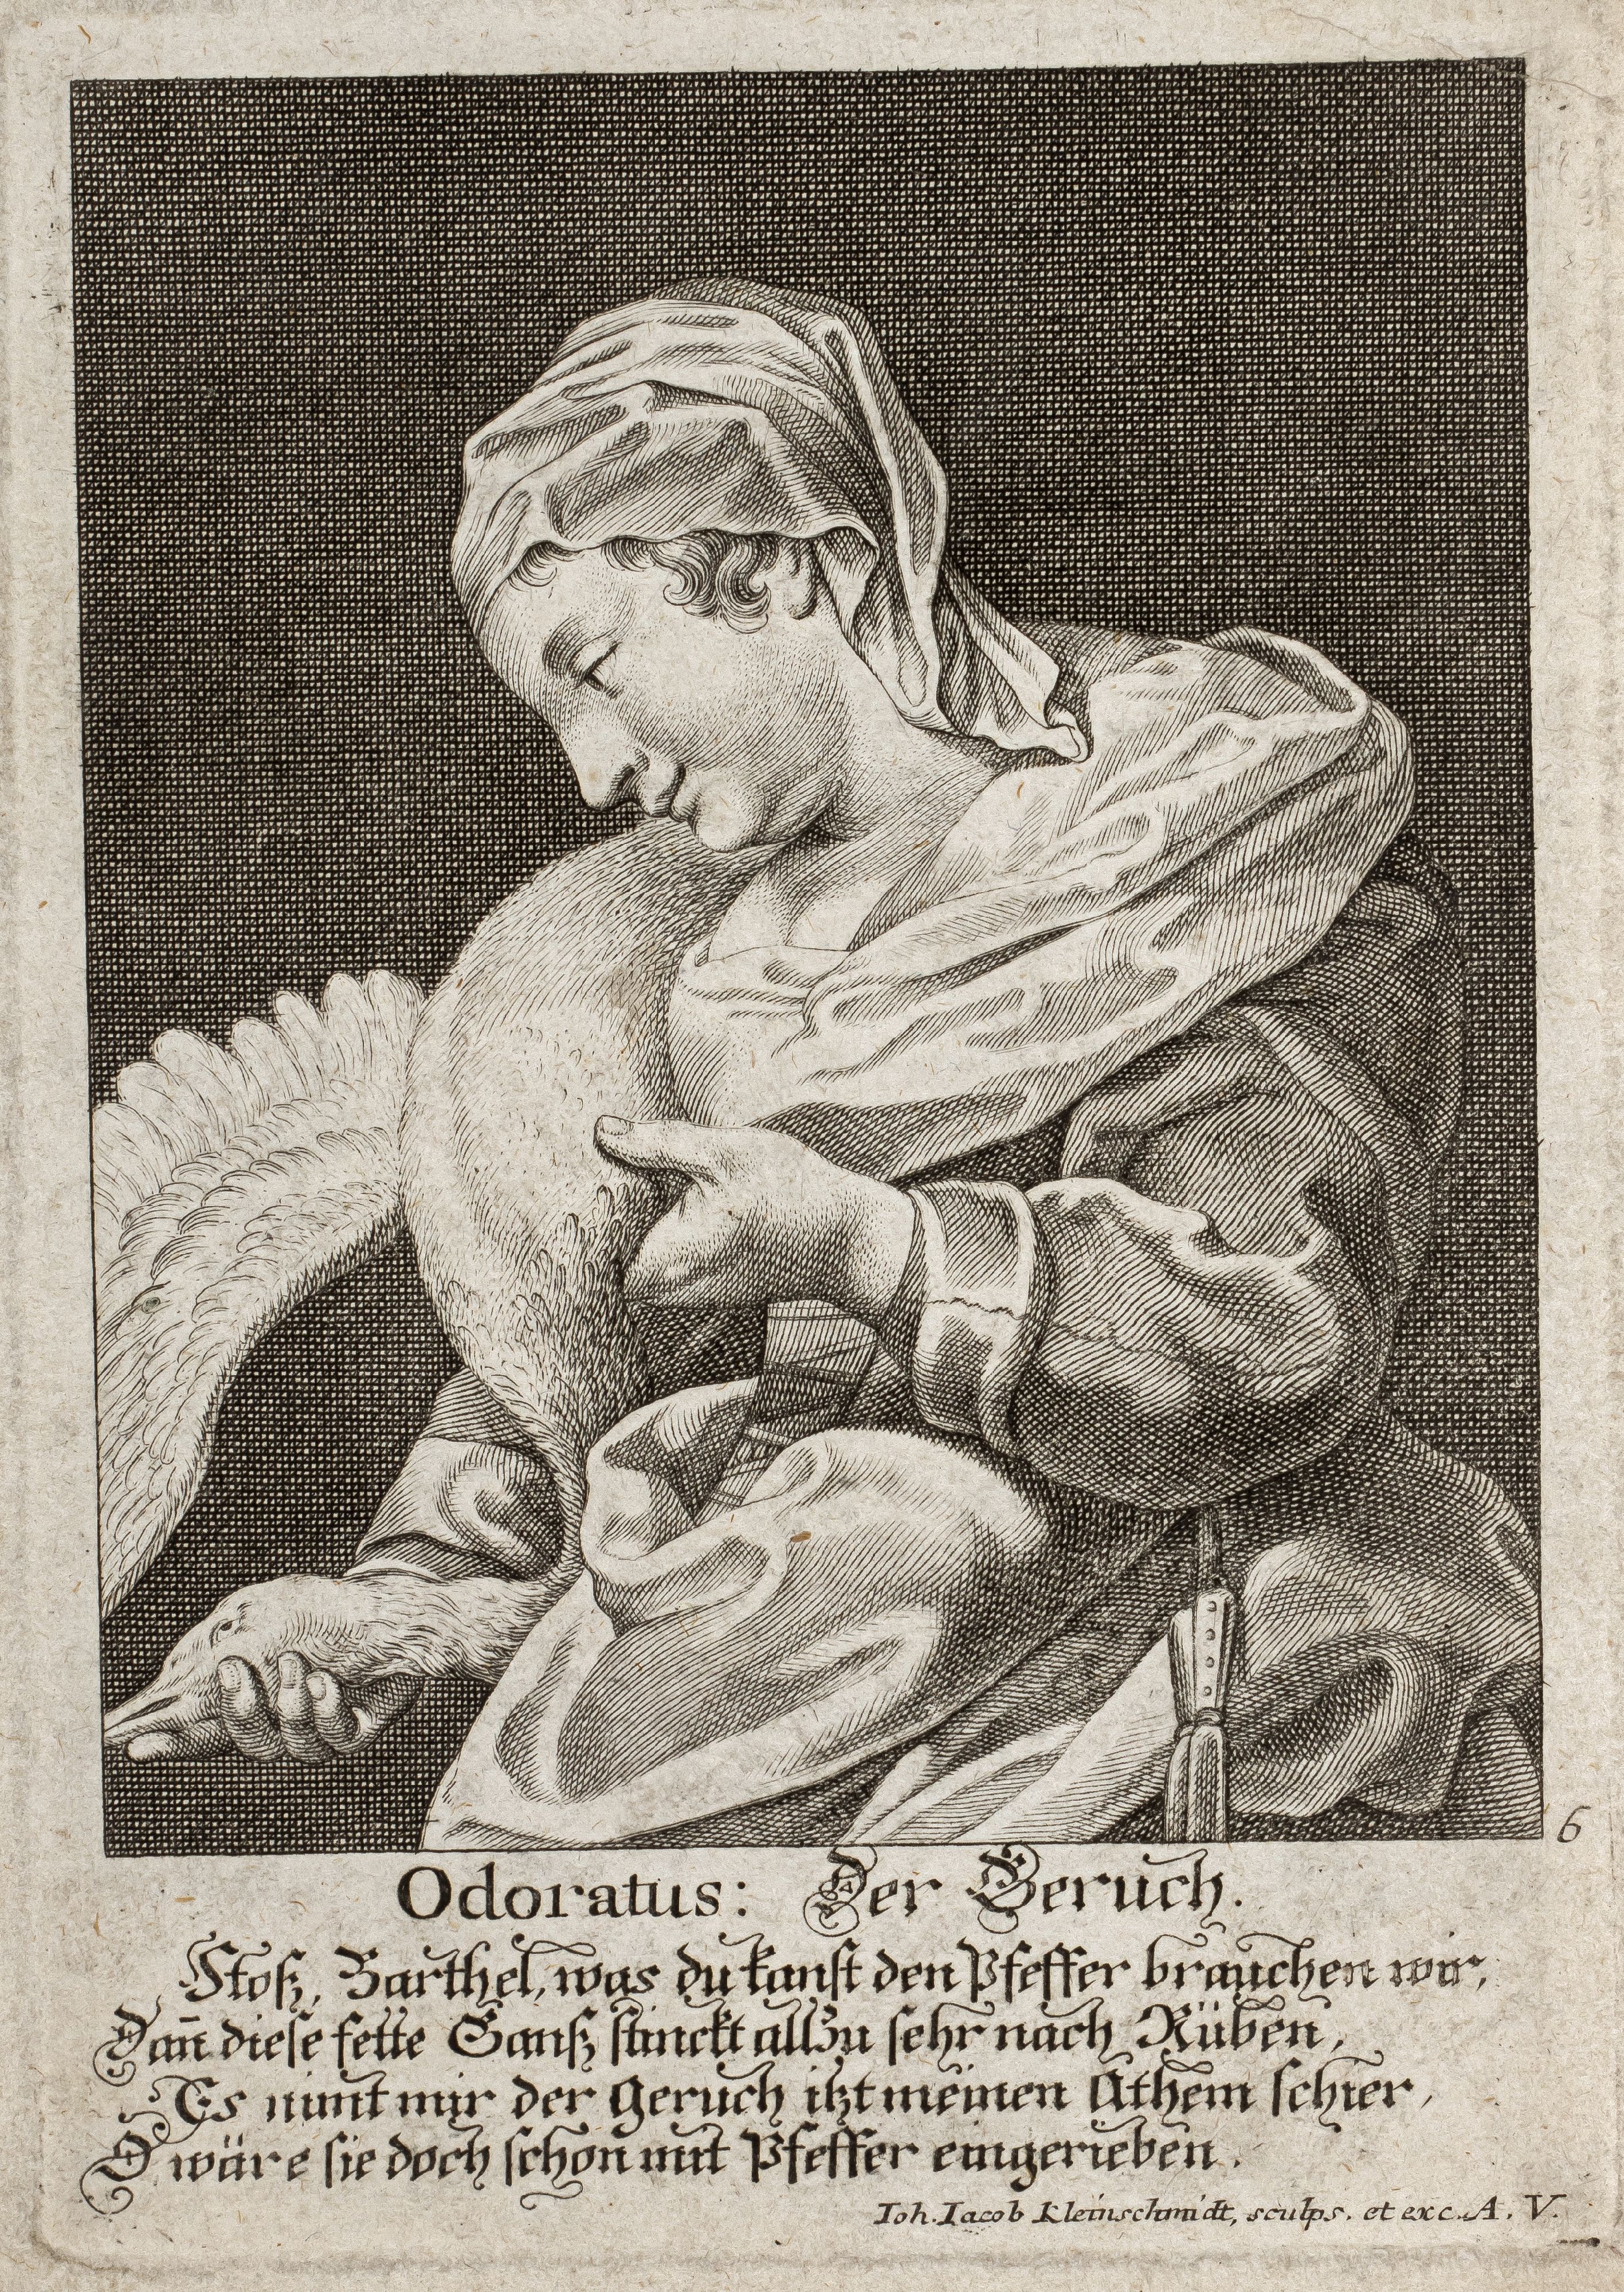 Kleinschmidt, Johann Jacob | 1678 Augsburg - 1772 Ebenda - Image 10 of 14